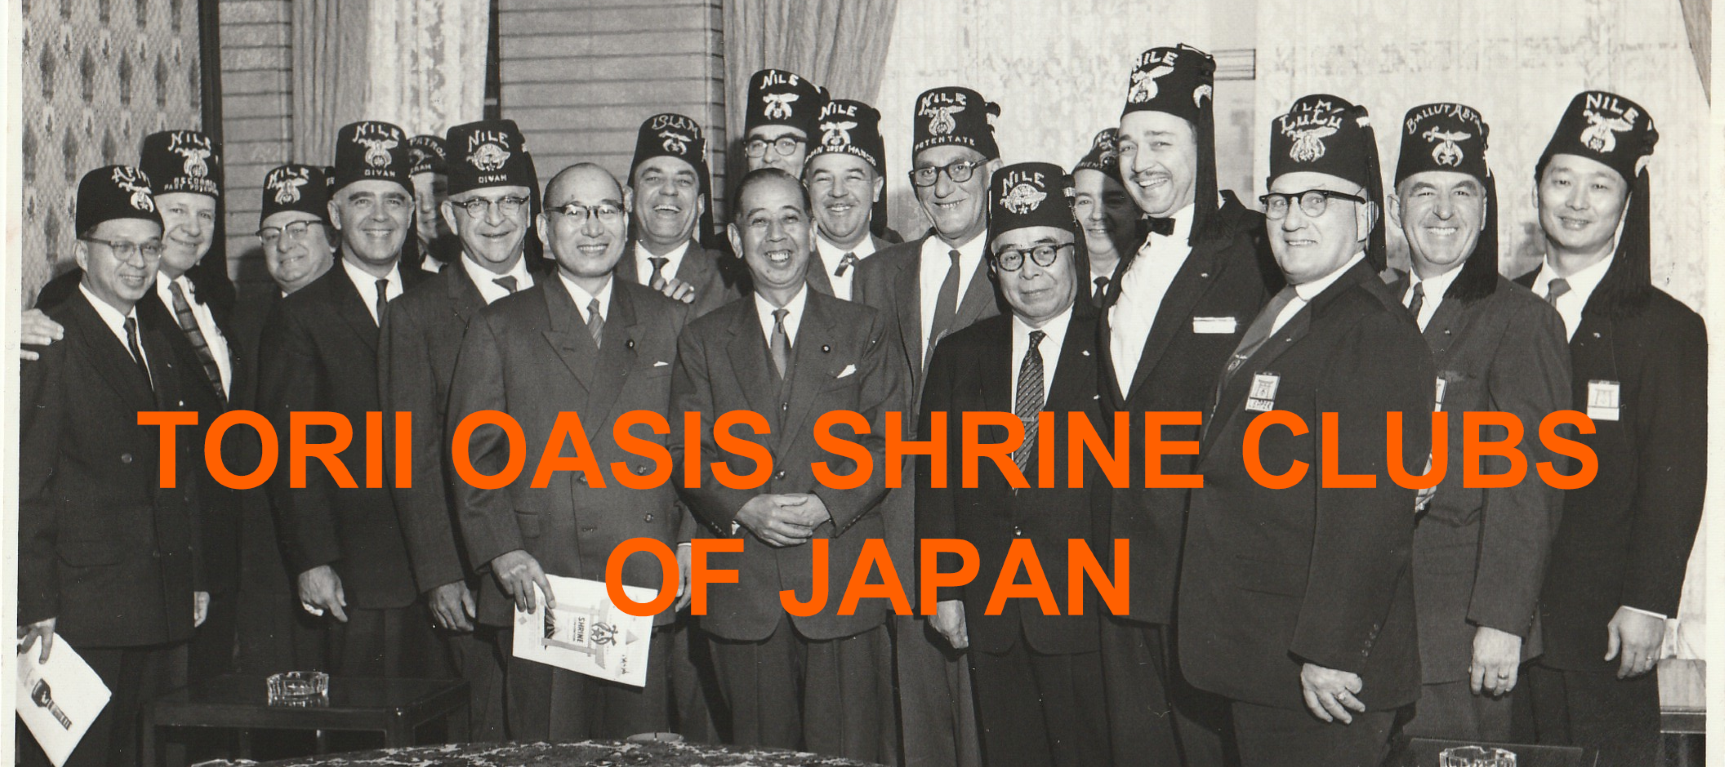 TORII OASIS SHRINE CLUBS OF JAPAN